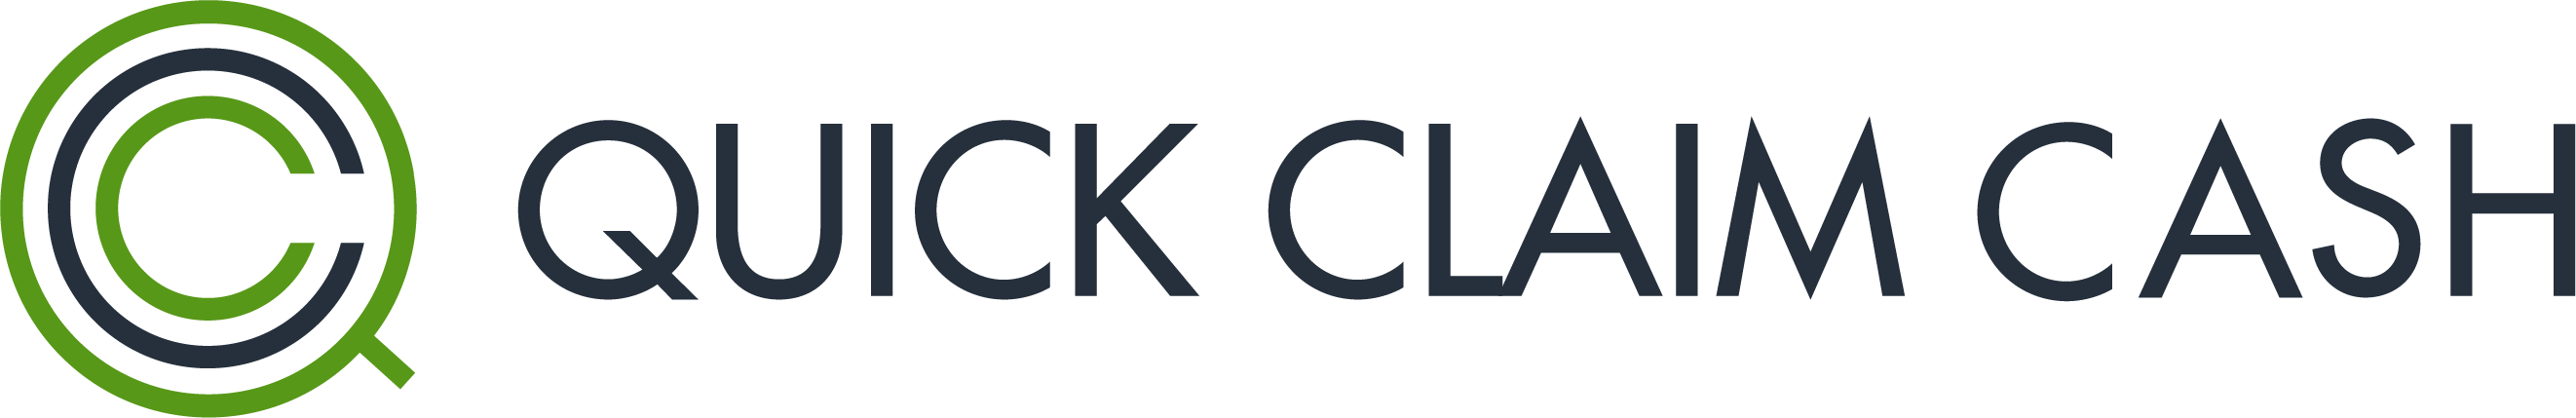 Qcc Logo Dark 1